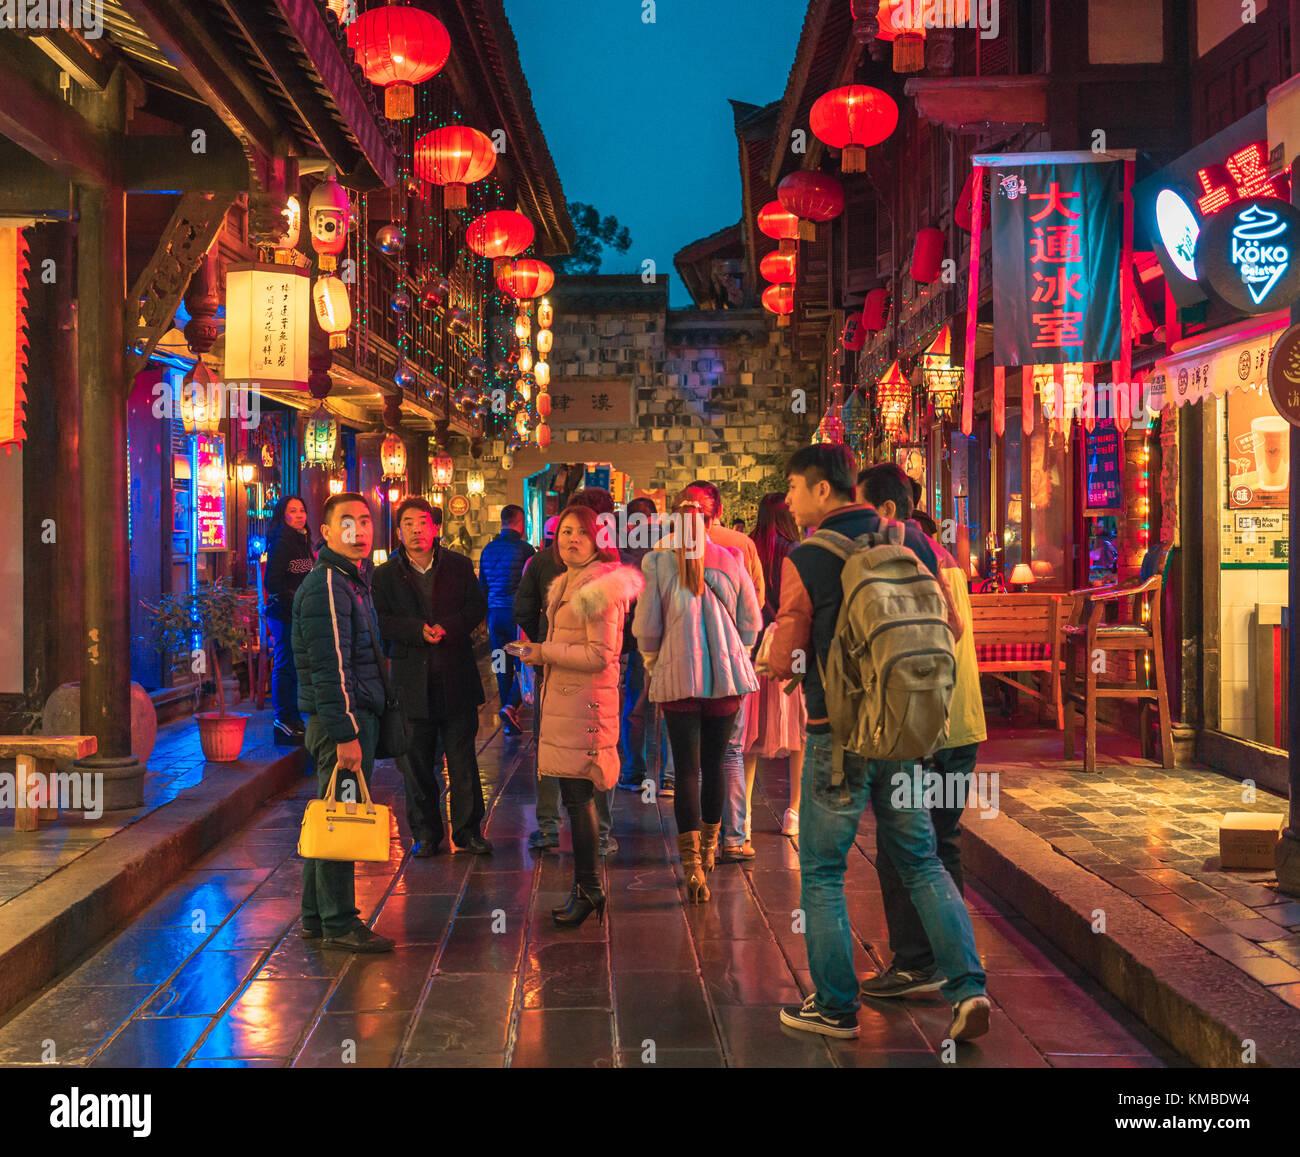 Chengdu Sichuan China, 22 November 2017: Jinli ancient town night scene street view Stock Photo